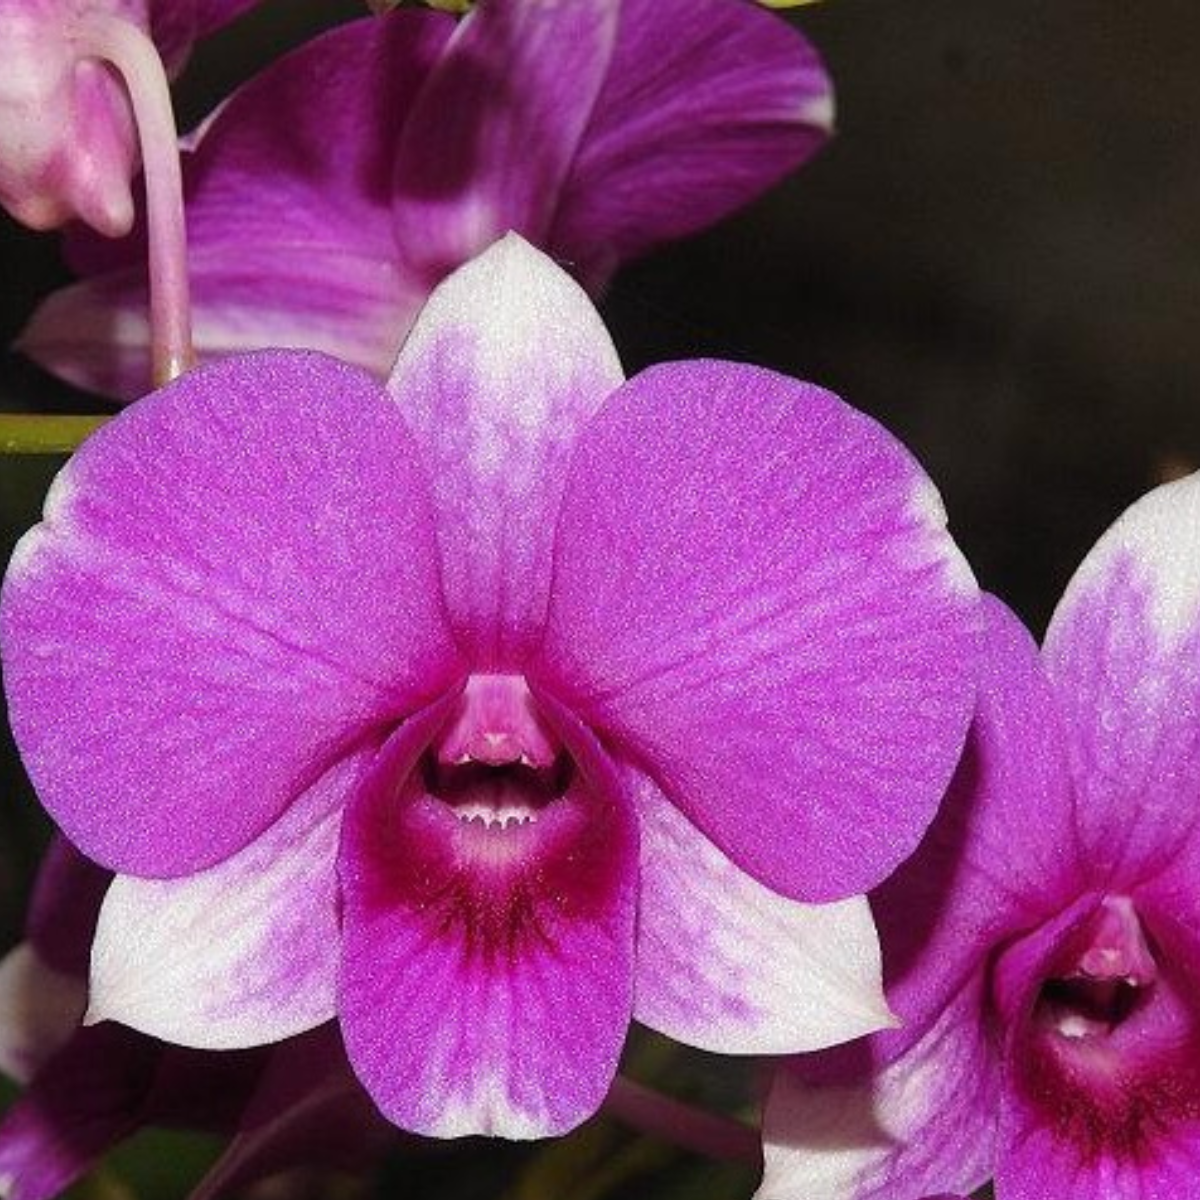 Den Pretty Princess x Compectum Orchid - Exquisite Beauty for Your Home